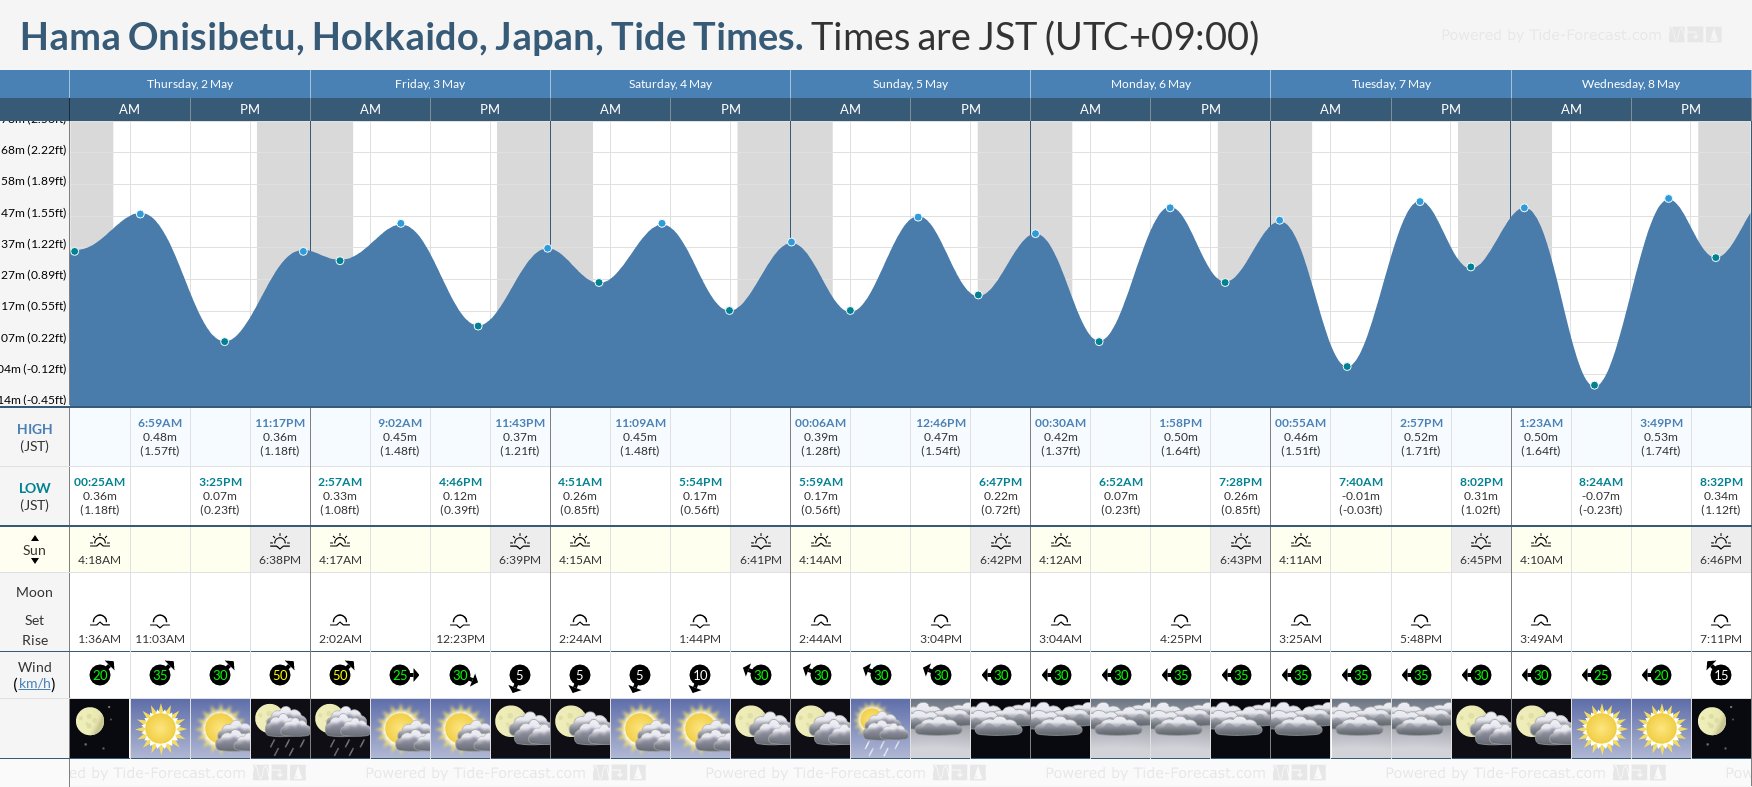 Hama Onisibetu, Hokkaido, Japan Tide Chart including high and low tide tide times for the next 7 days